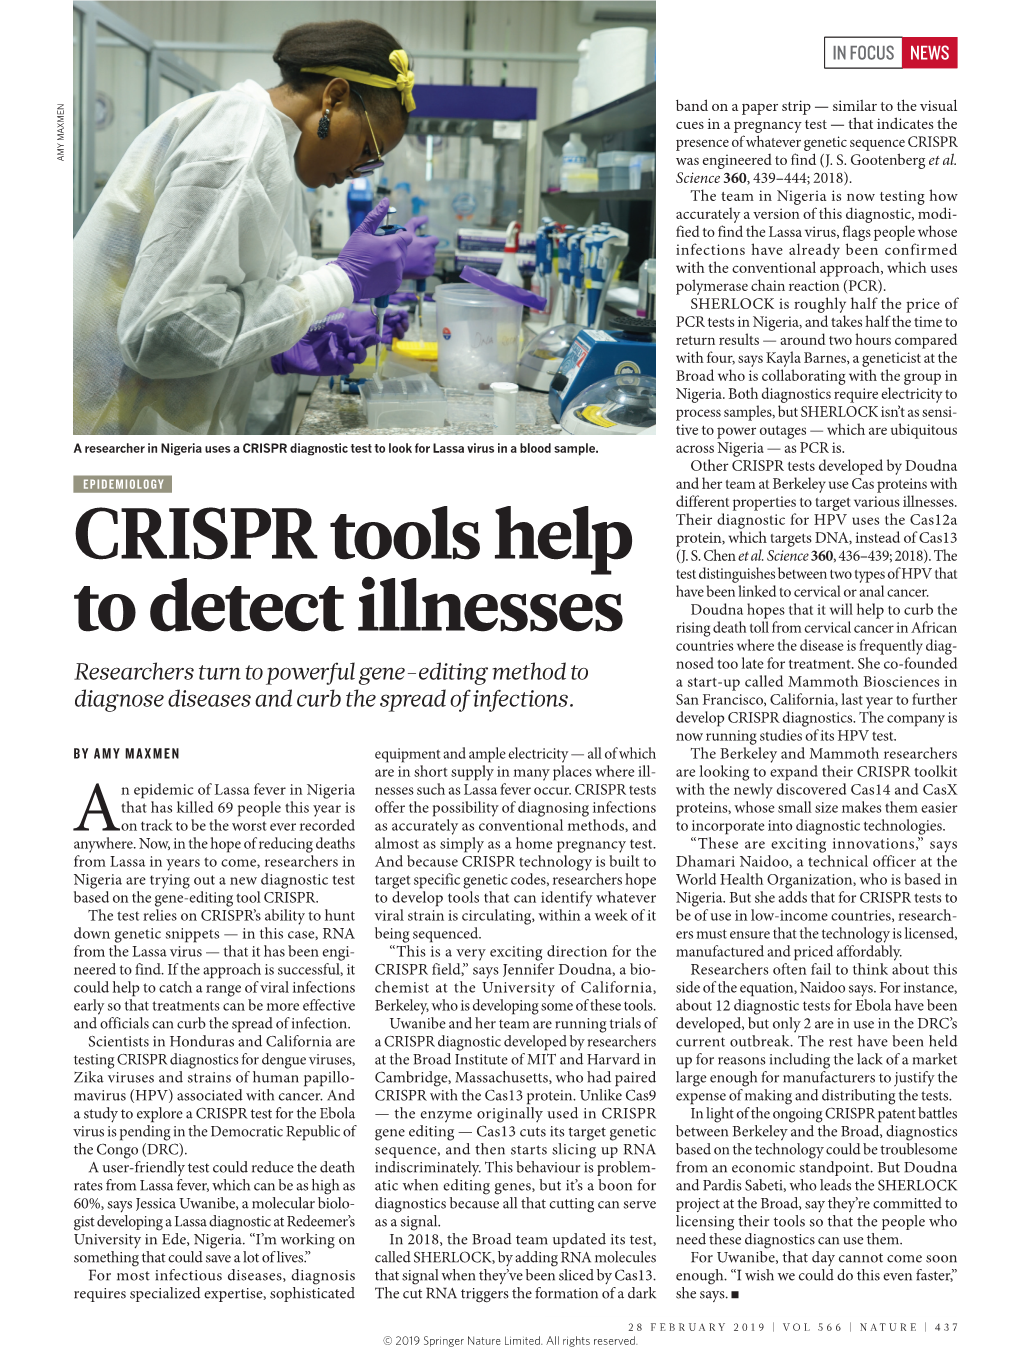 CRISPR Tools Help to Detect Illnesses